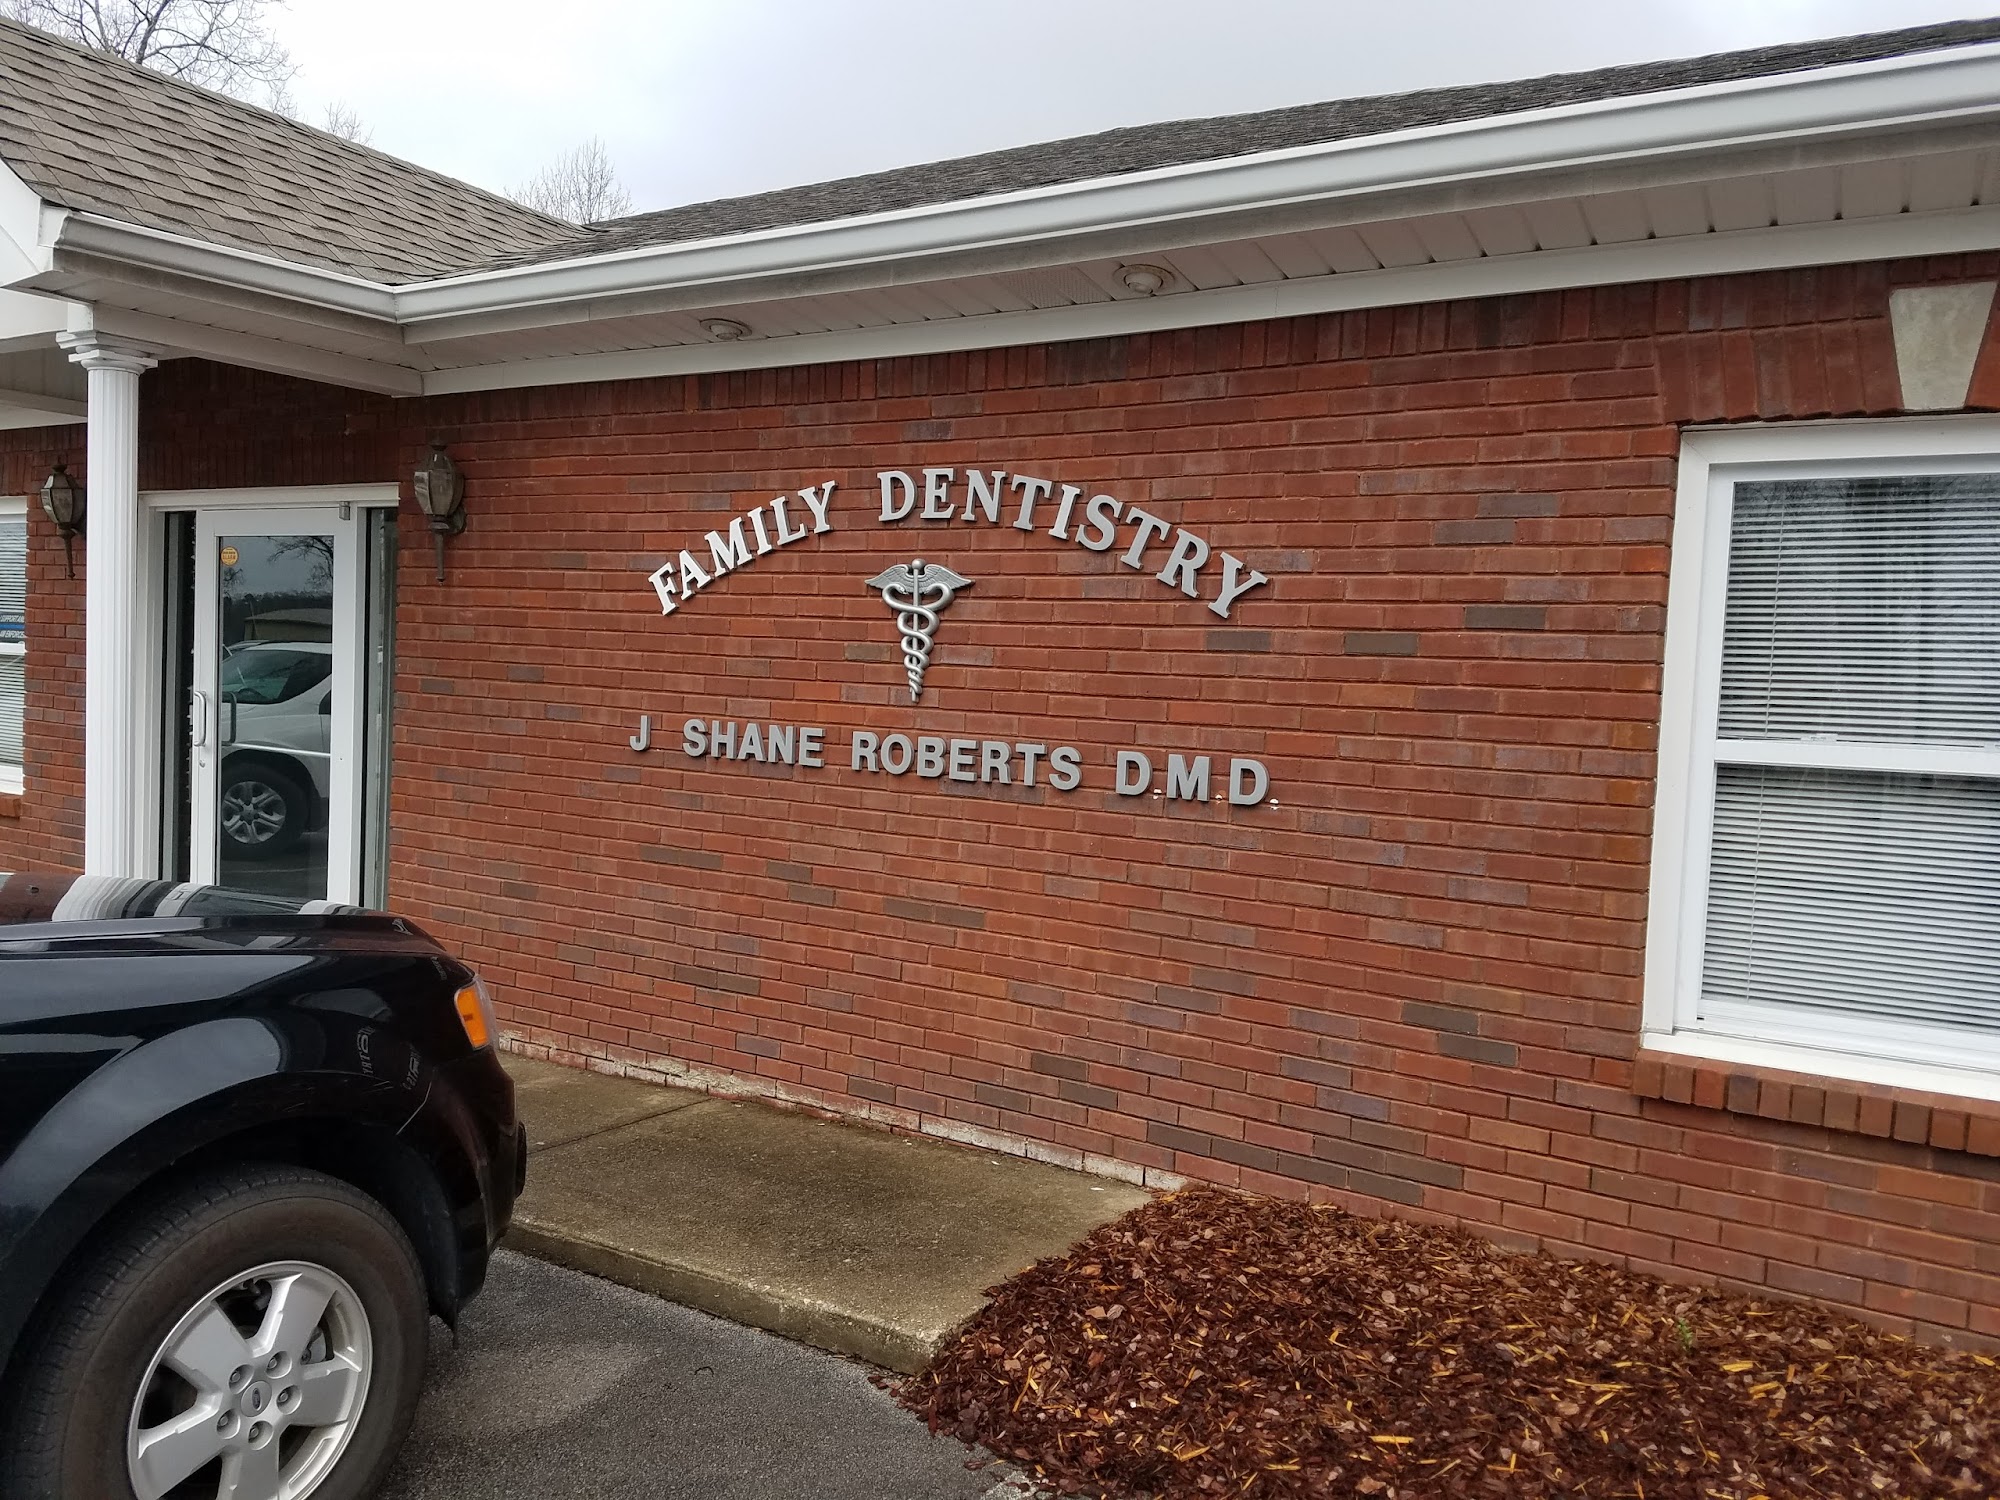 J Shane Roberts Family Dentistry 904 4th St, Pleasant Grove Alabama 35127